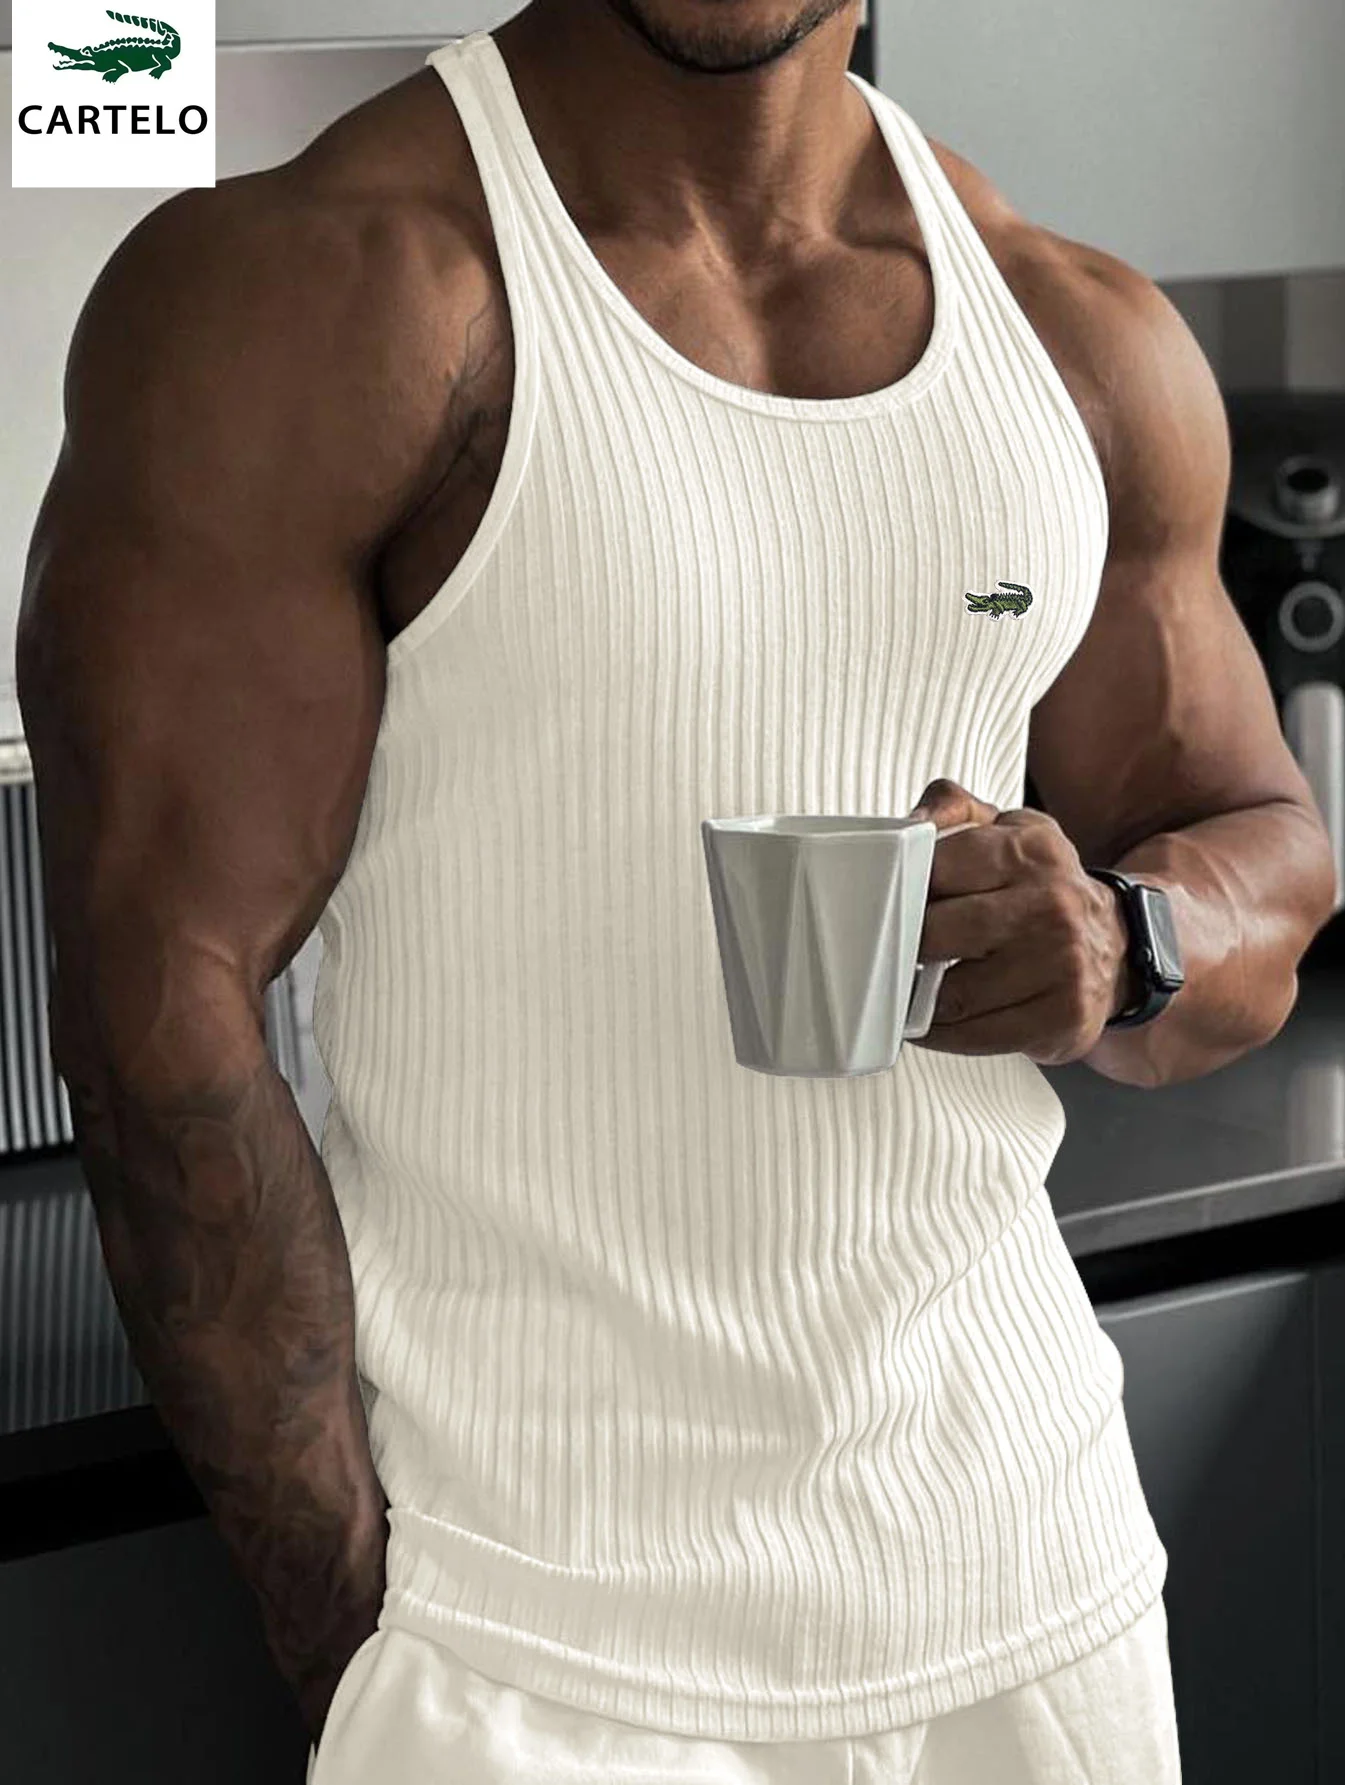 

Brand gym Running cotton singlets canotte bodybuilding stringer tank top men fitness shirt muscle guys sleeveless vest Tanktop